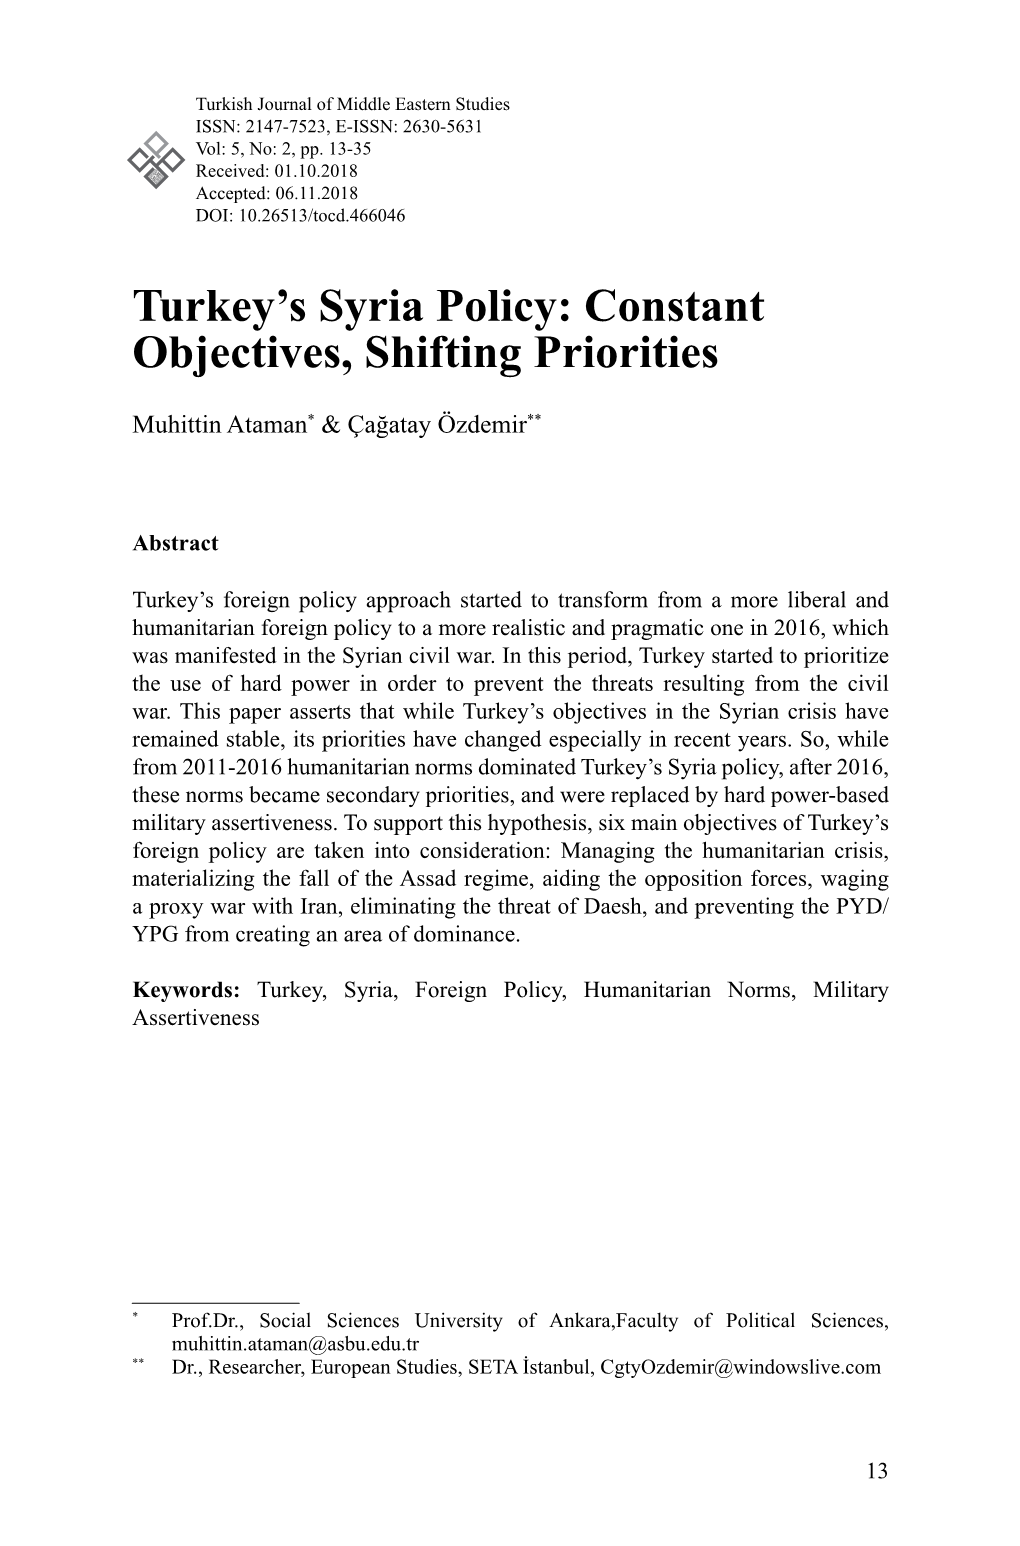 Turkey's Syria Policy